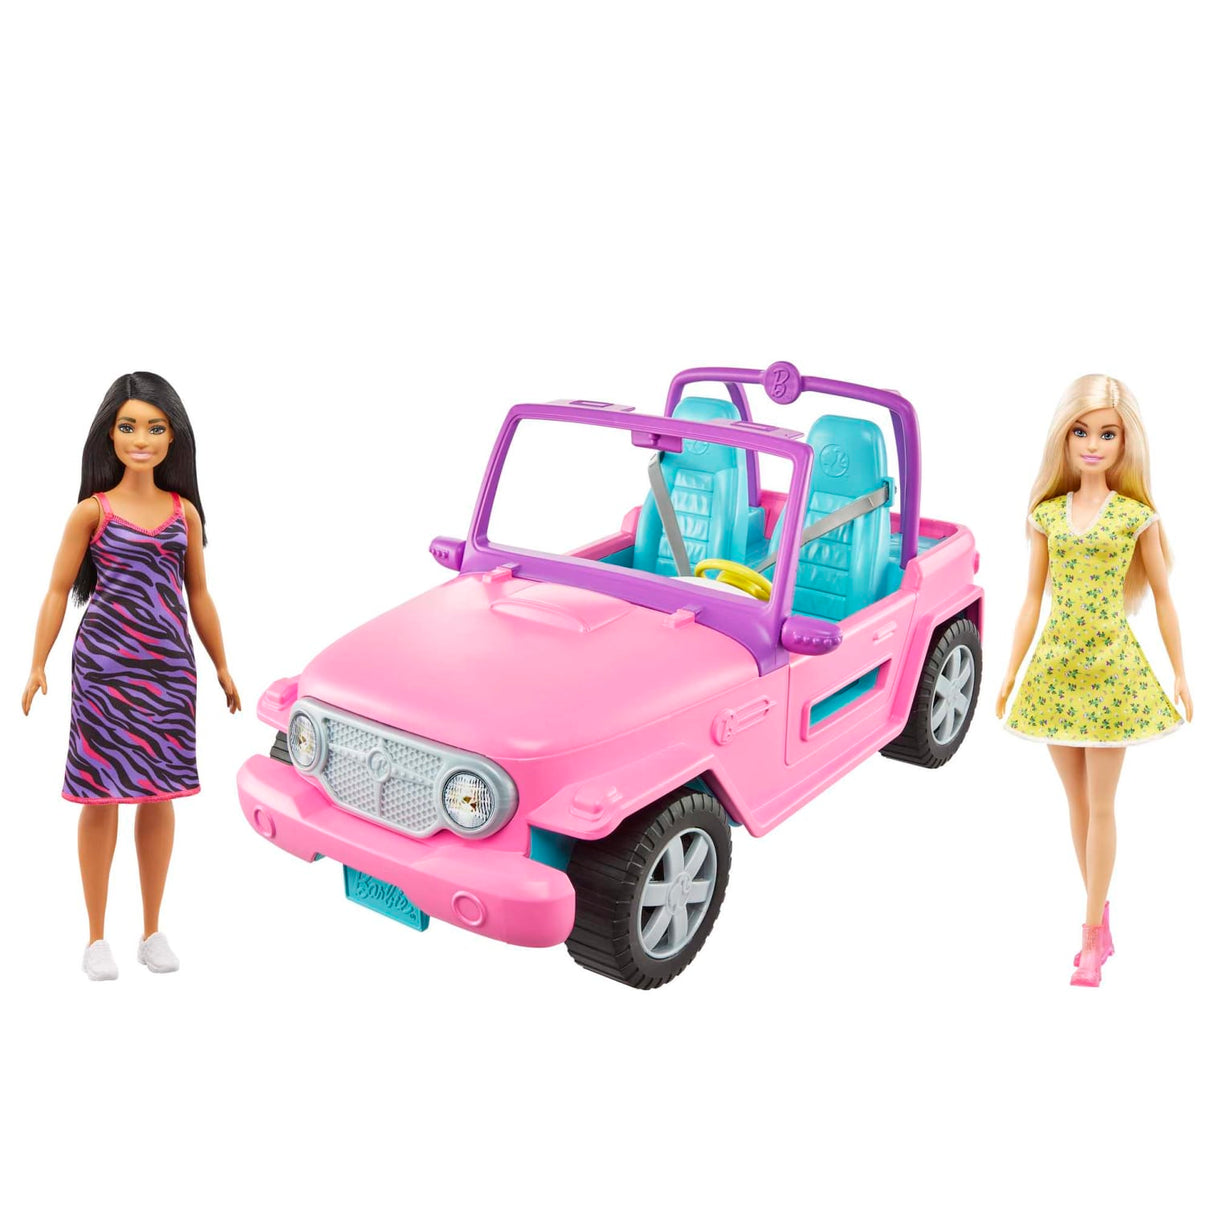 Barbie Car with Dolls